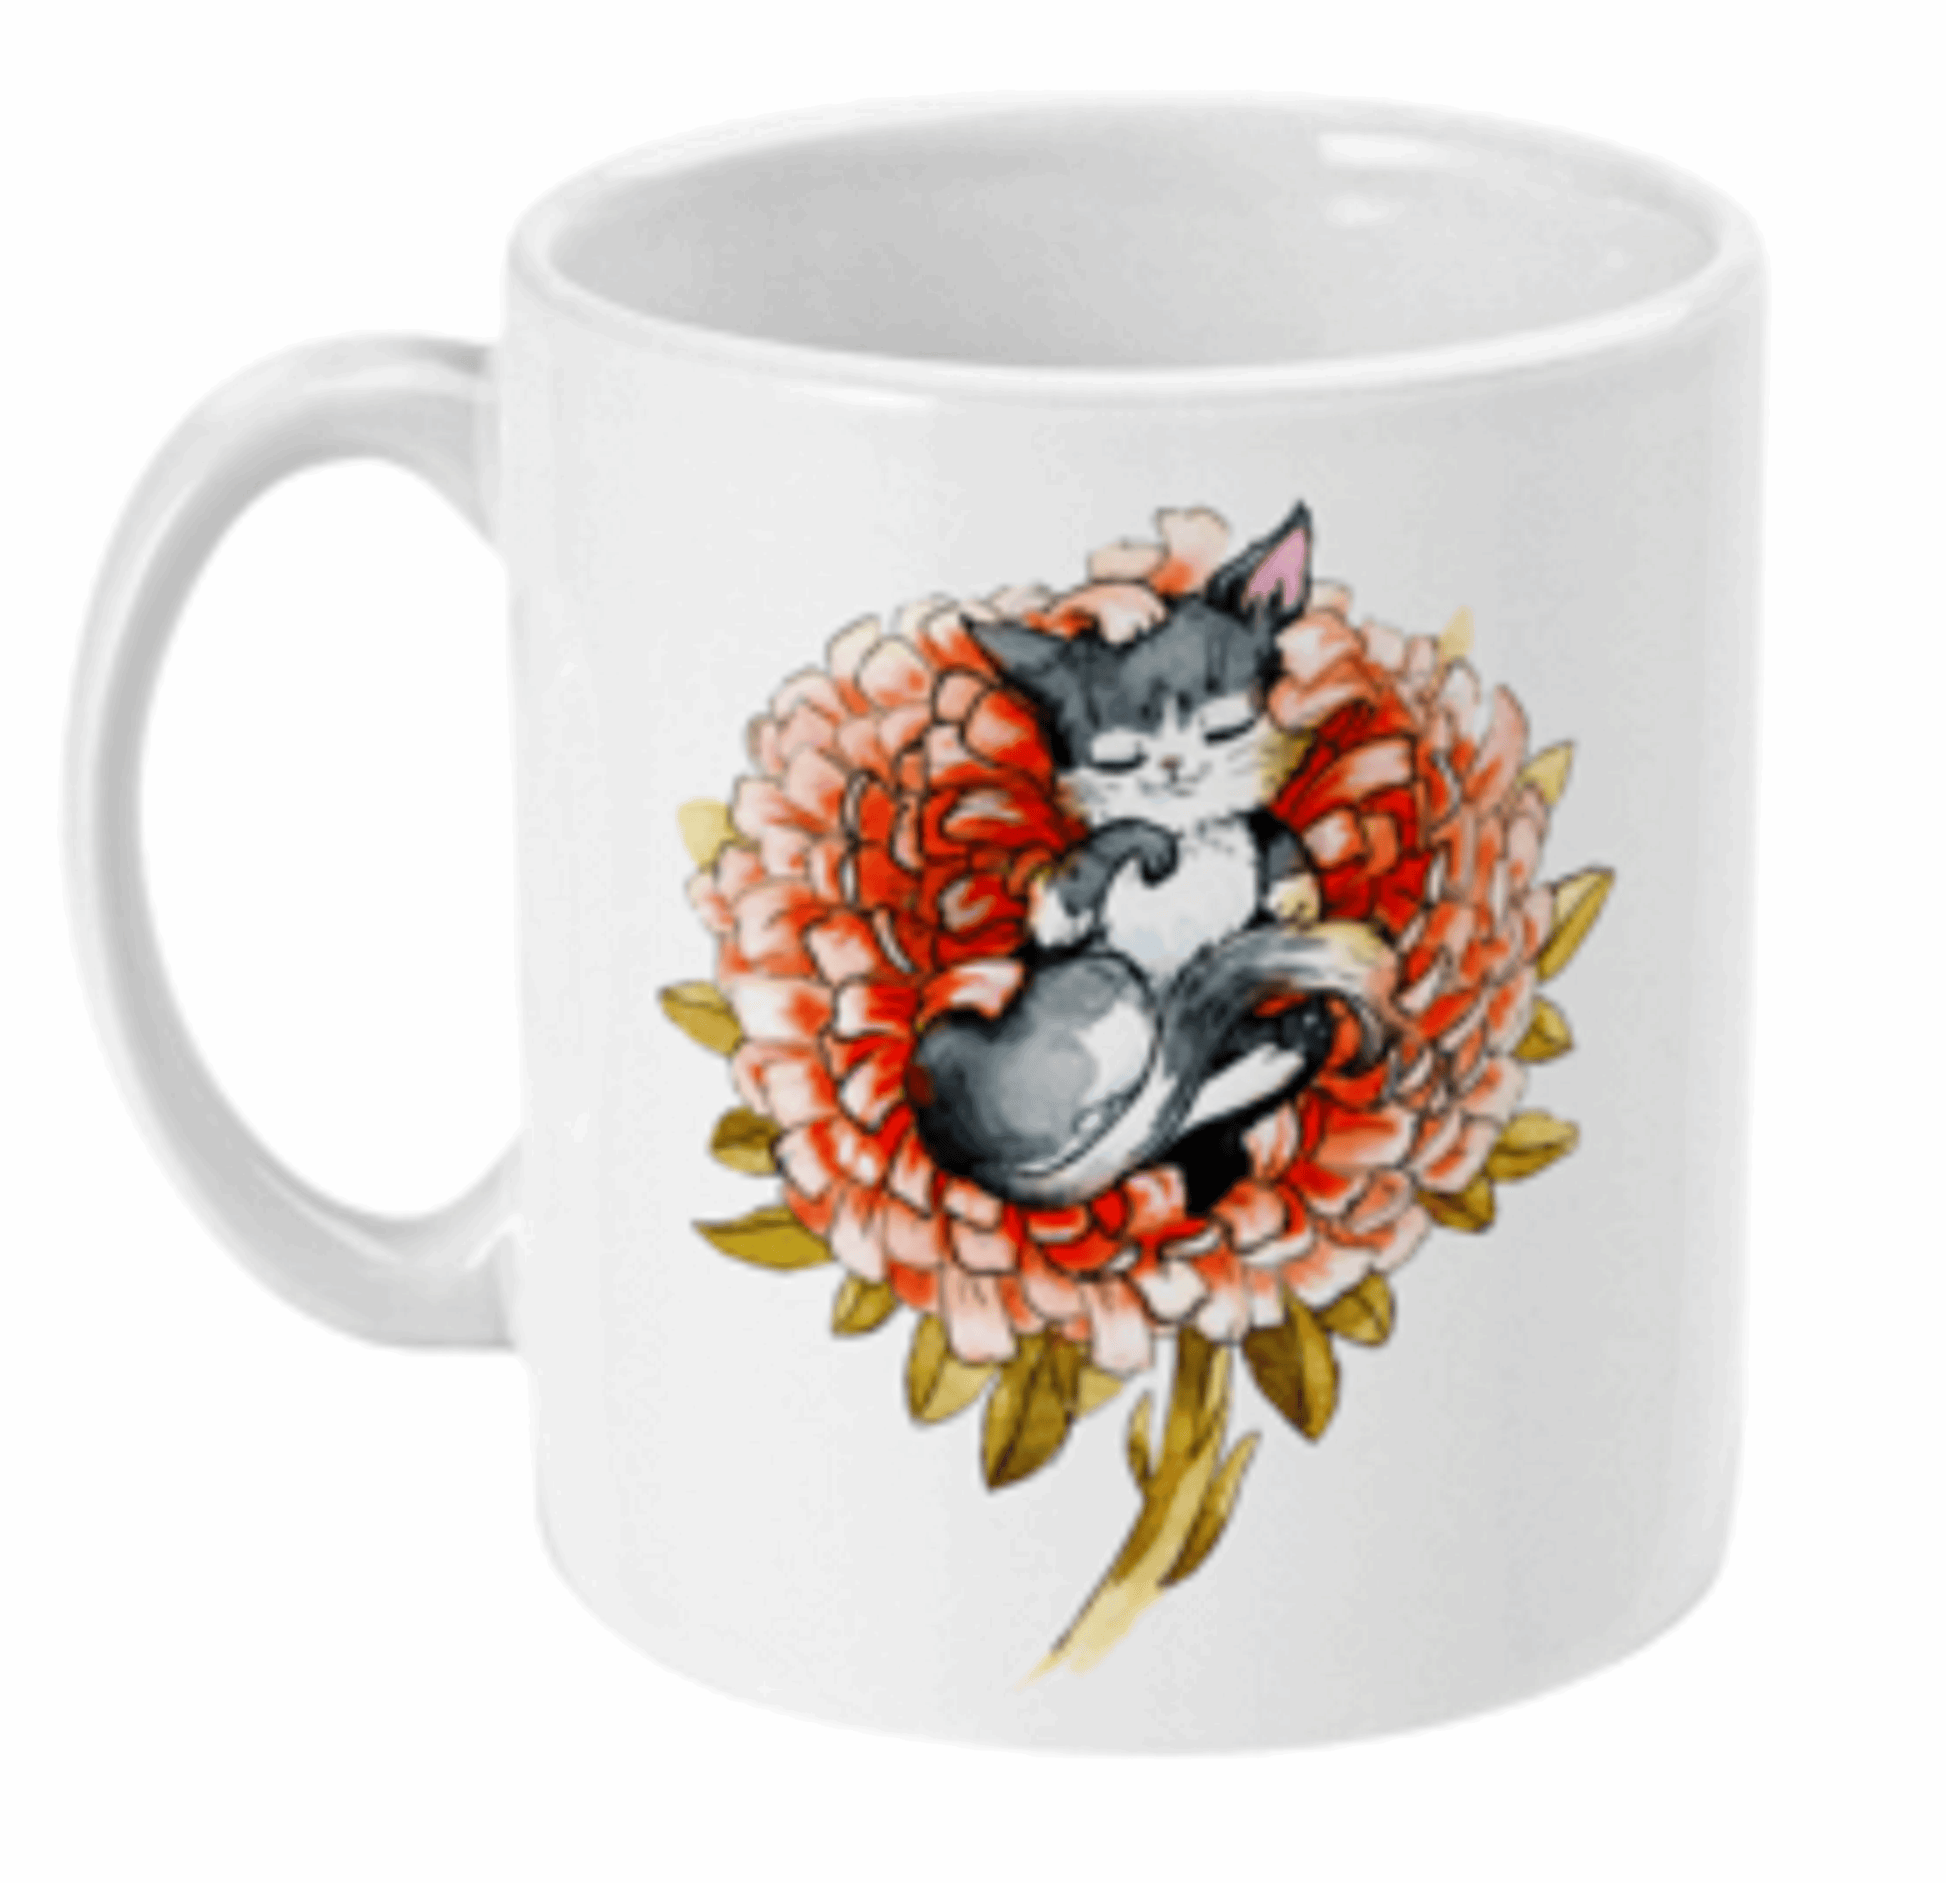  Cat Asleep on Flower Coffee or Tea Mug by Free Spirit Accessories sold by Free Spirit Accessories